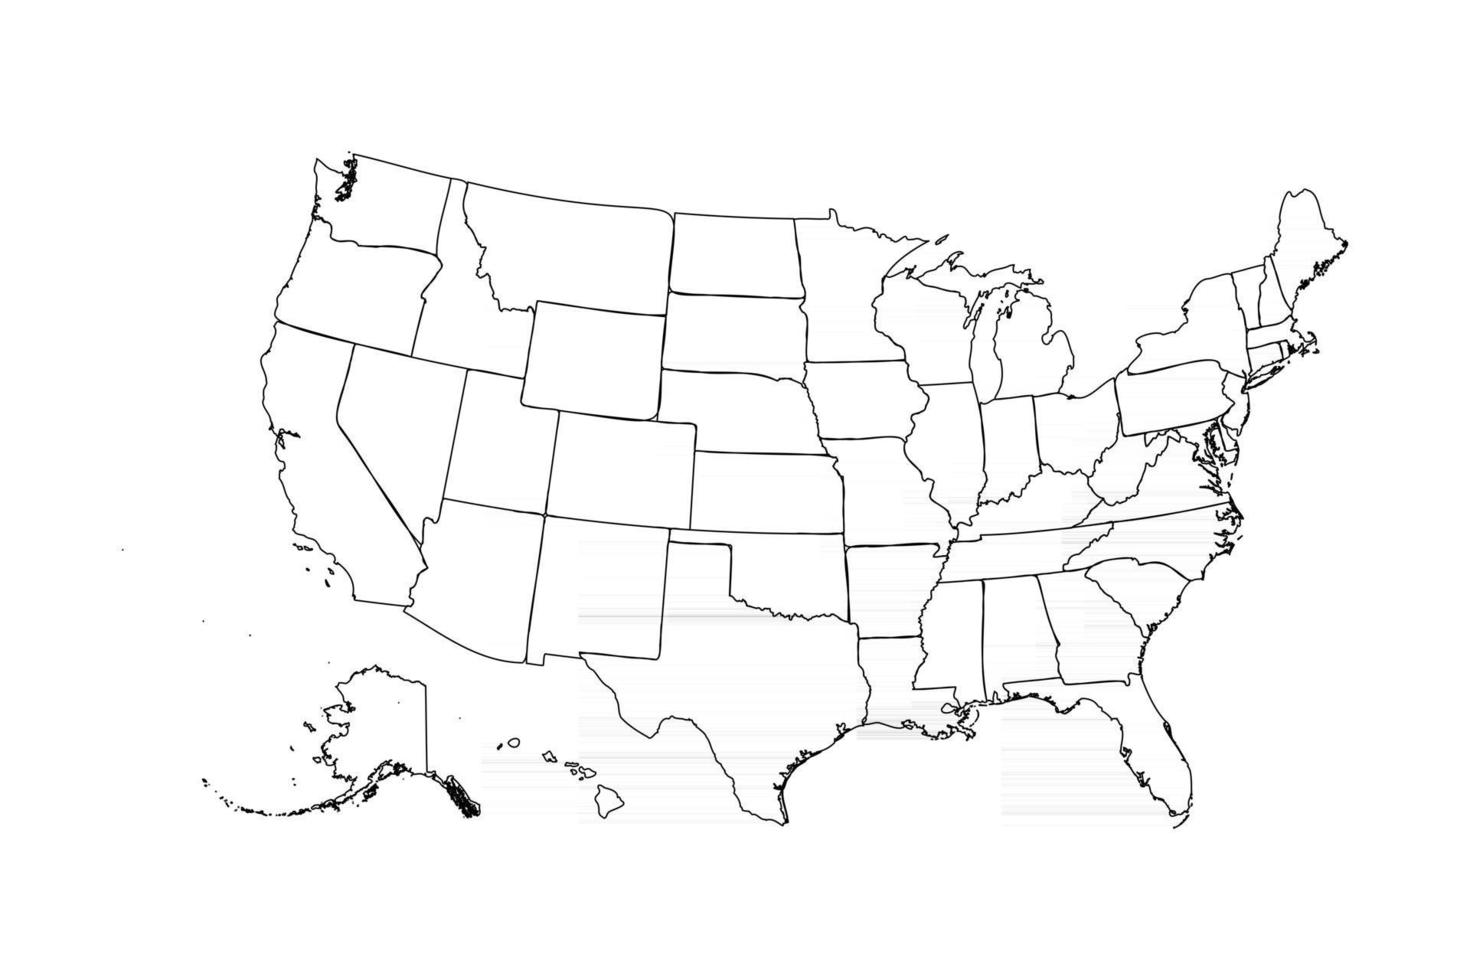 Gekritzelkarte der USA mit Staaten vektor